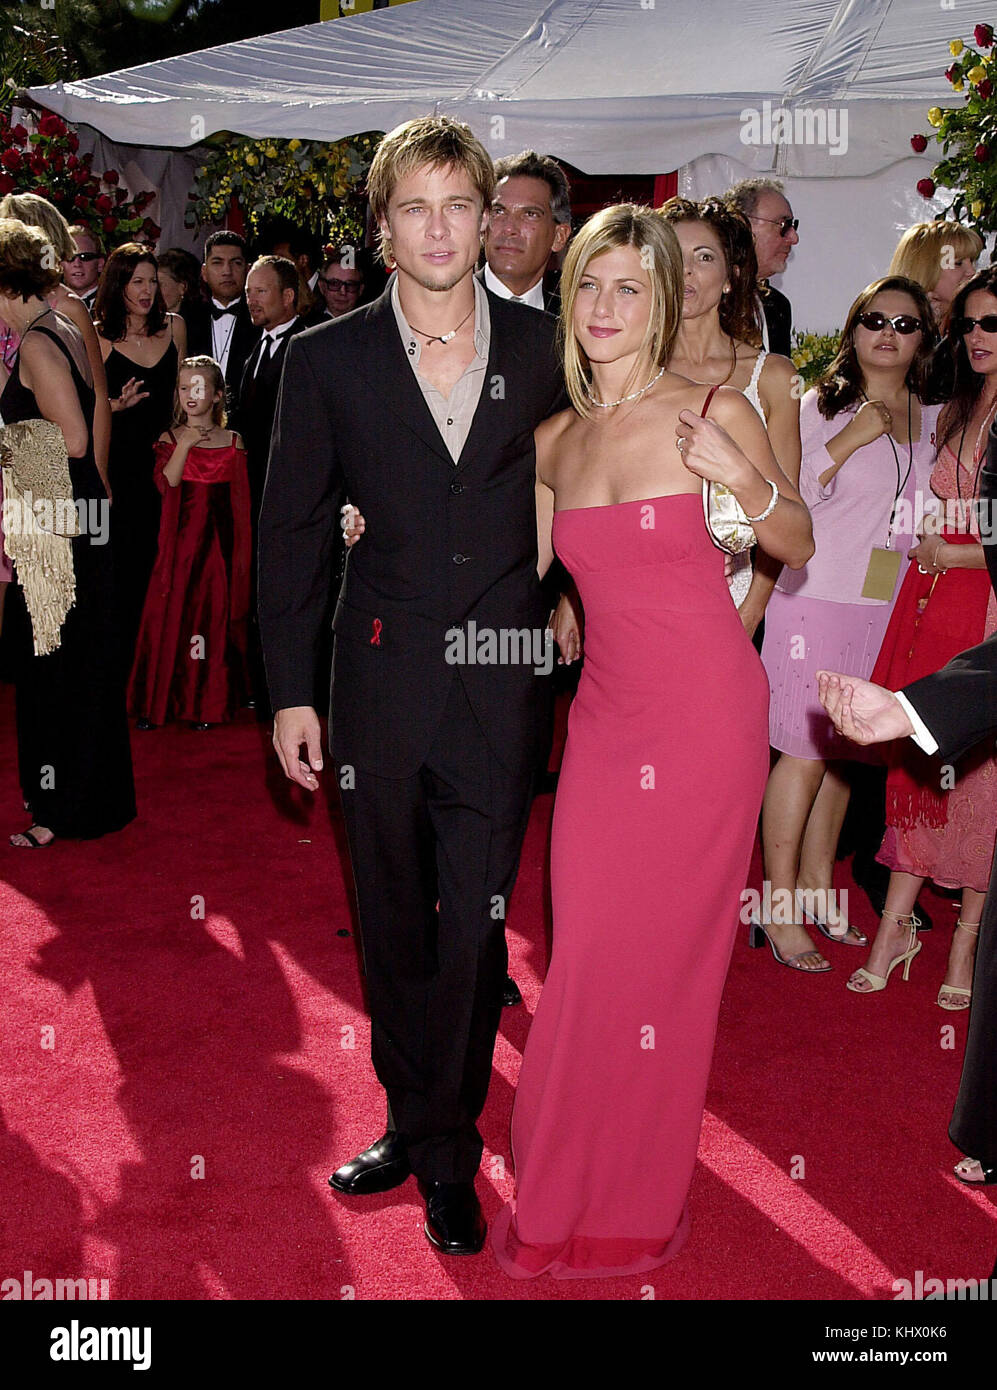 Aniston Jenn.+Pitt Brad 1. Actor, Actress, Premiere, celebrities event, Arrival, Vertical, Film Industry, Celebrities, Bestof, Arts Culture and Entertainment, Topix Stock Photo